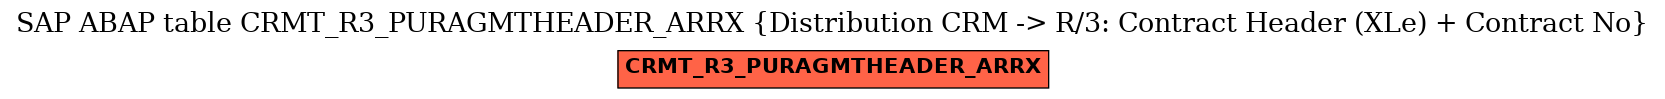 E-R Diagram for table CRMT_R3_PURAGMTHEADER_ARRX (Distribution CRM -> R/3: Contract Header (XLe) + Contract No)